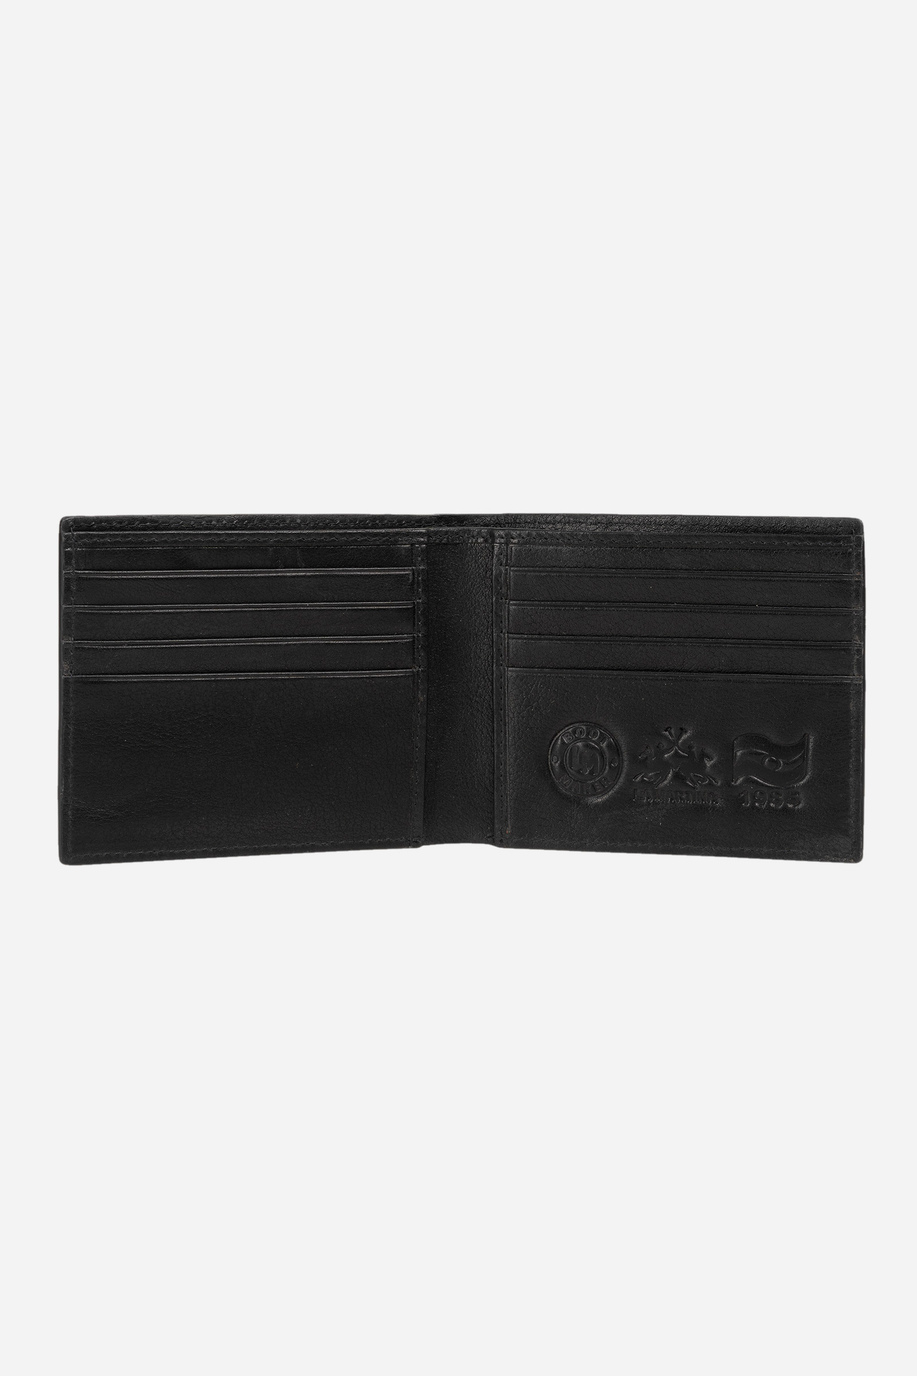 Men's leather wallet - Paulo - Accessories | La Martina - Official Online Shop